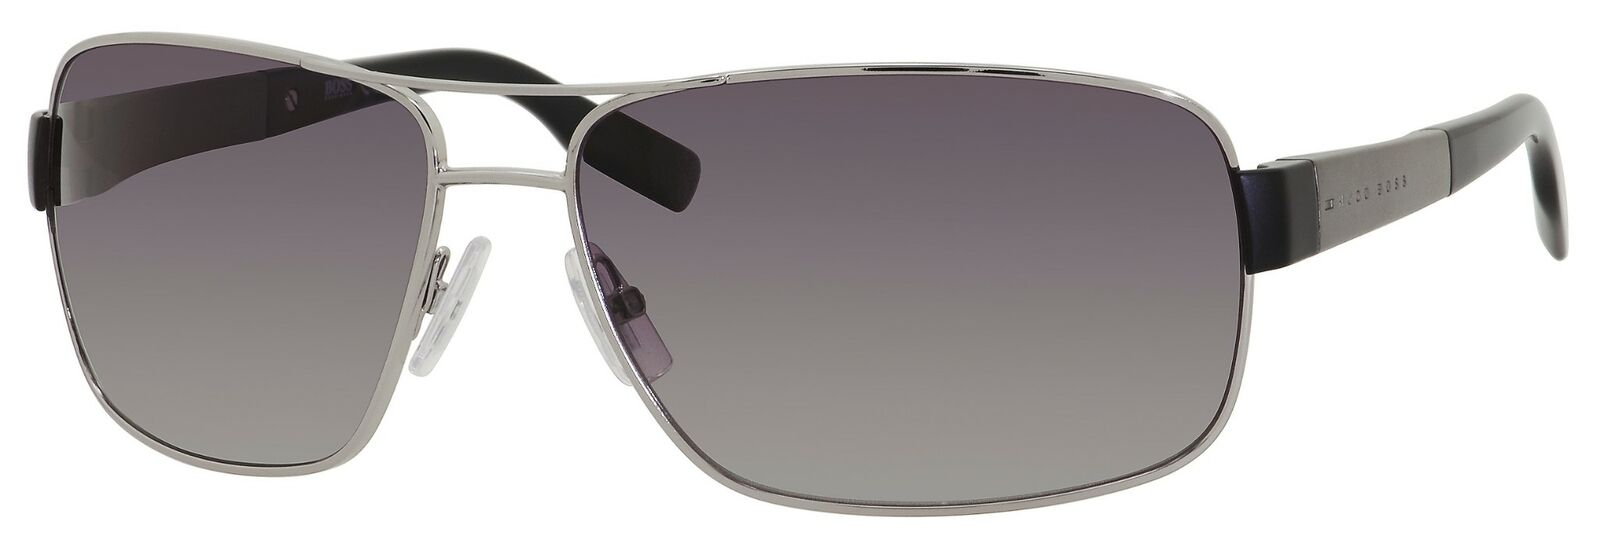 Authentic Boss 0521/S 0OFR/WJ Ruthenium/Gray Sf Polarized Sunglasses